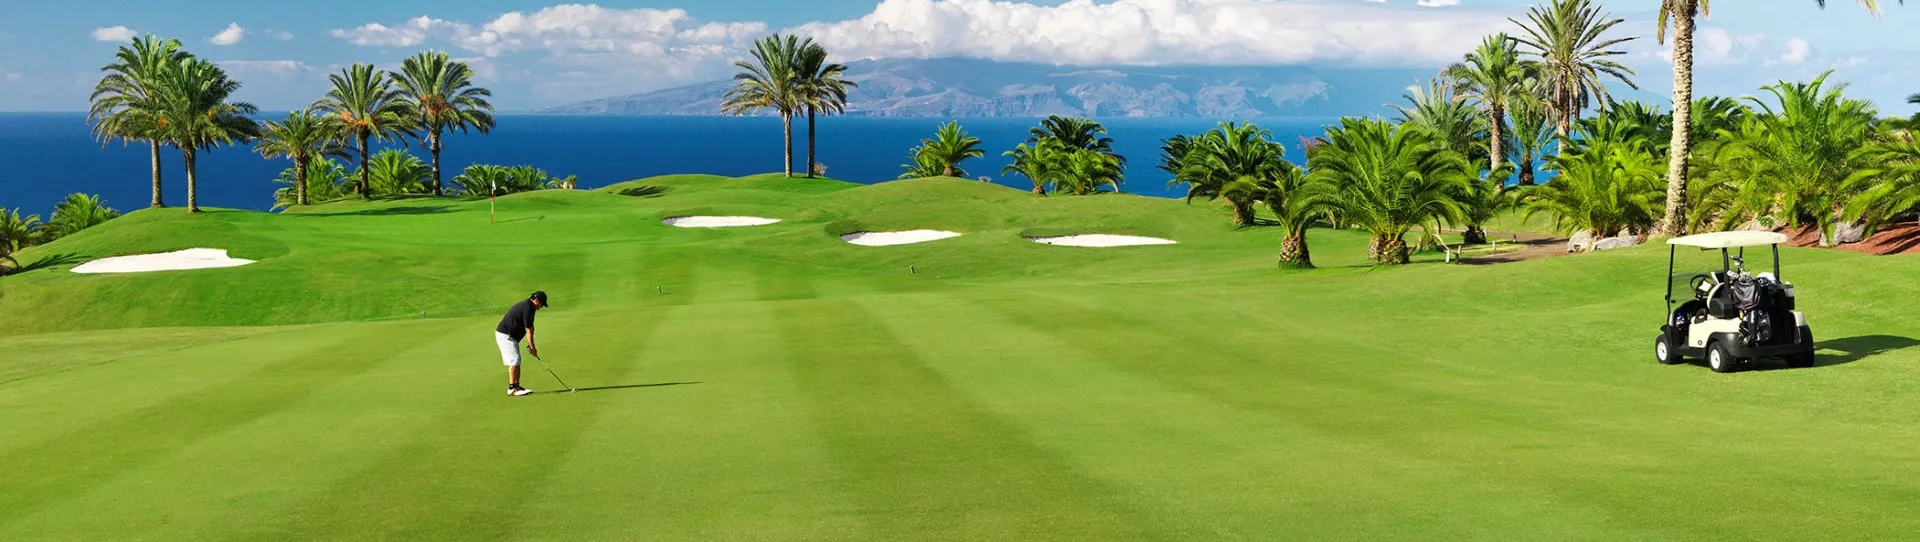 Spain golf courses - Abama Golf Course - Photo 1